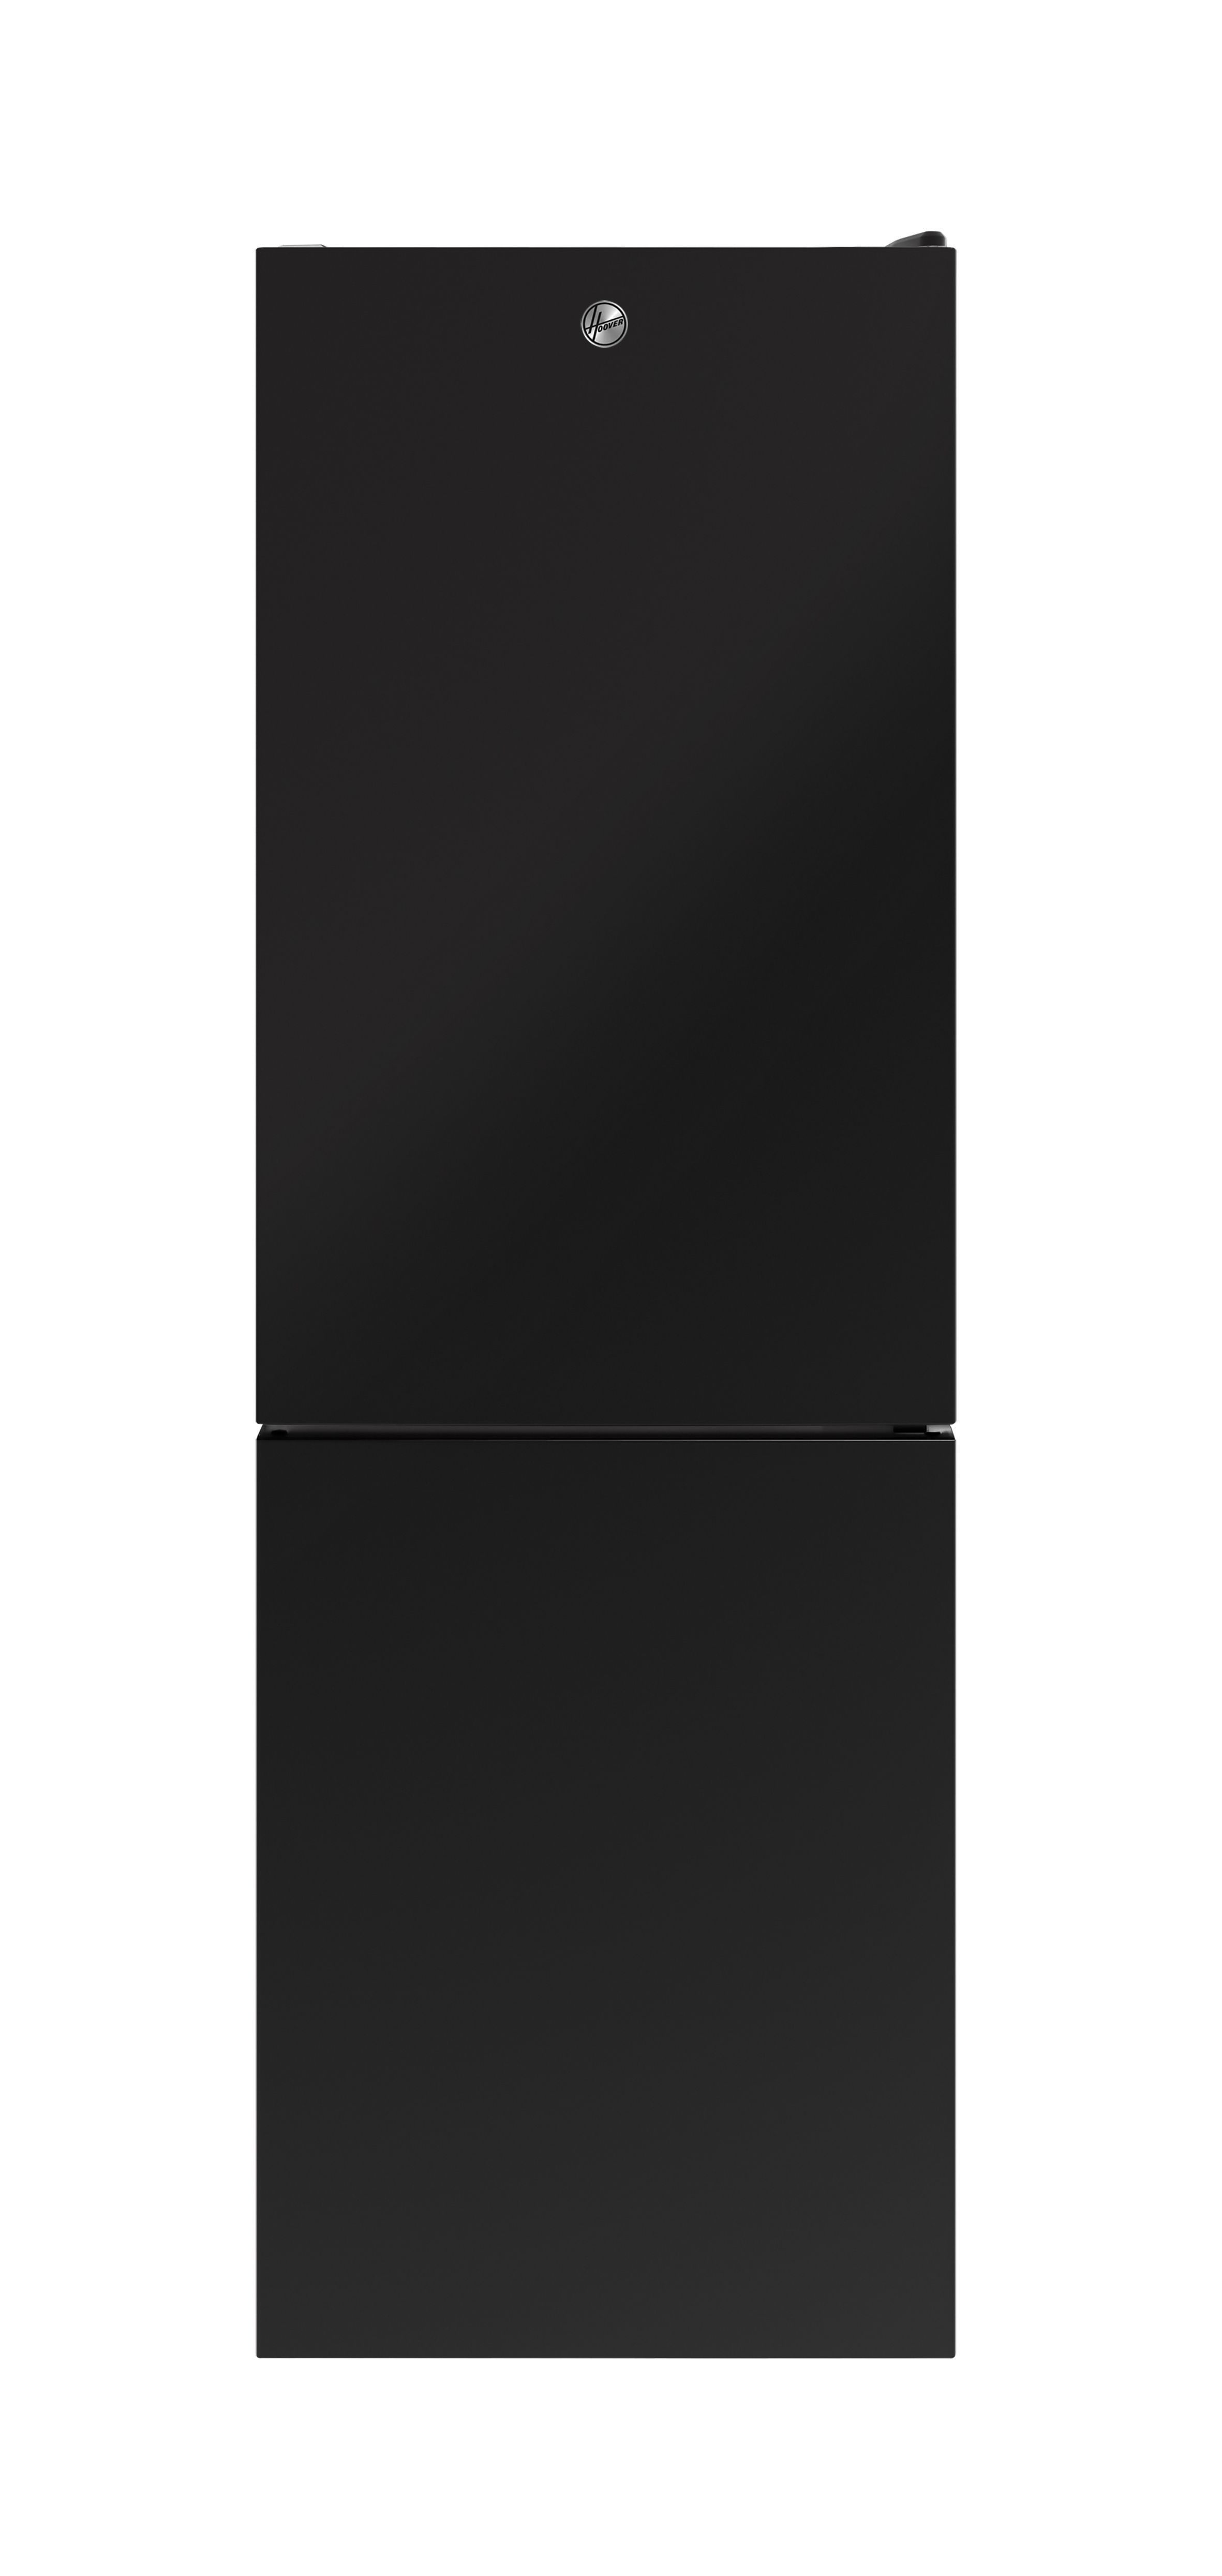 Hoover 34005209 60:40 Freestanding Automatic defrost Fridge freezer - Black